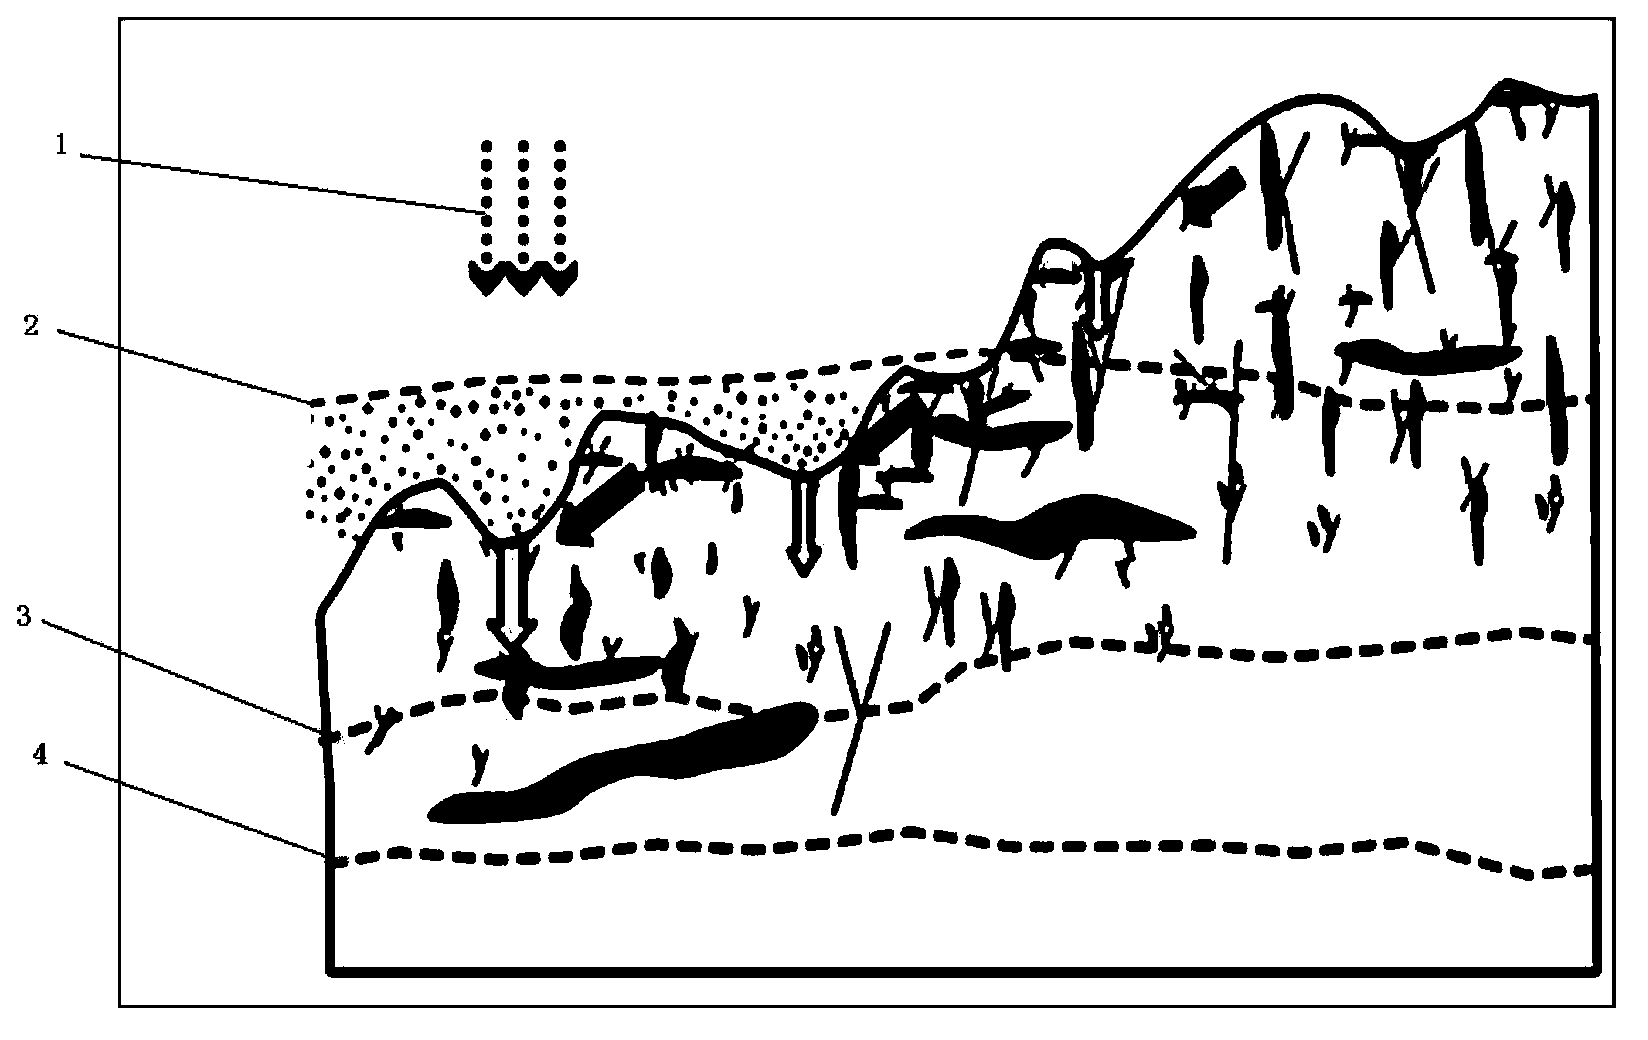 Carbonate rock buried hill cave layered interpretation method